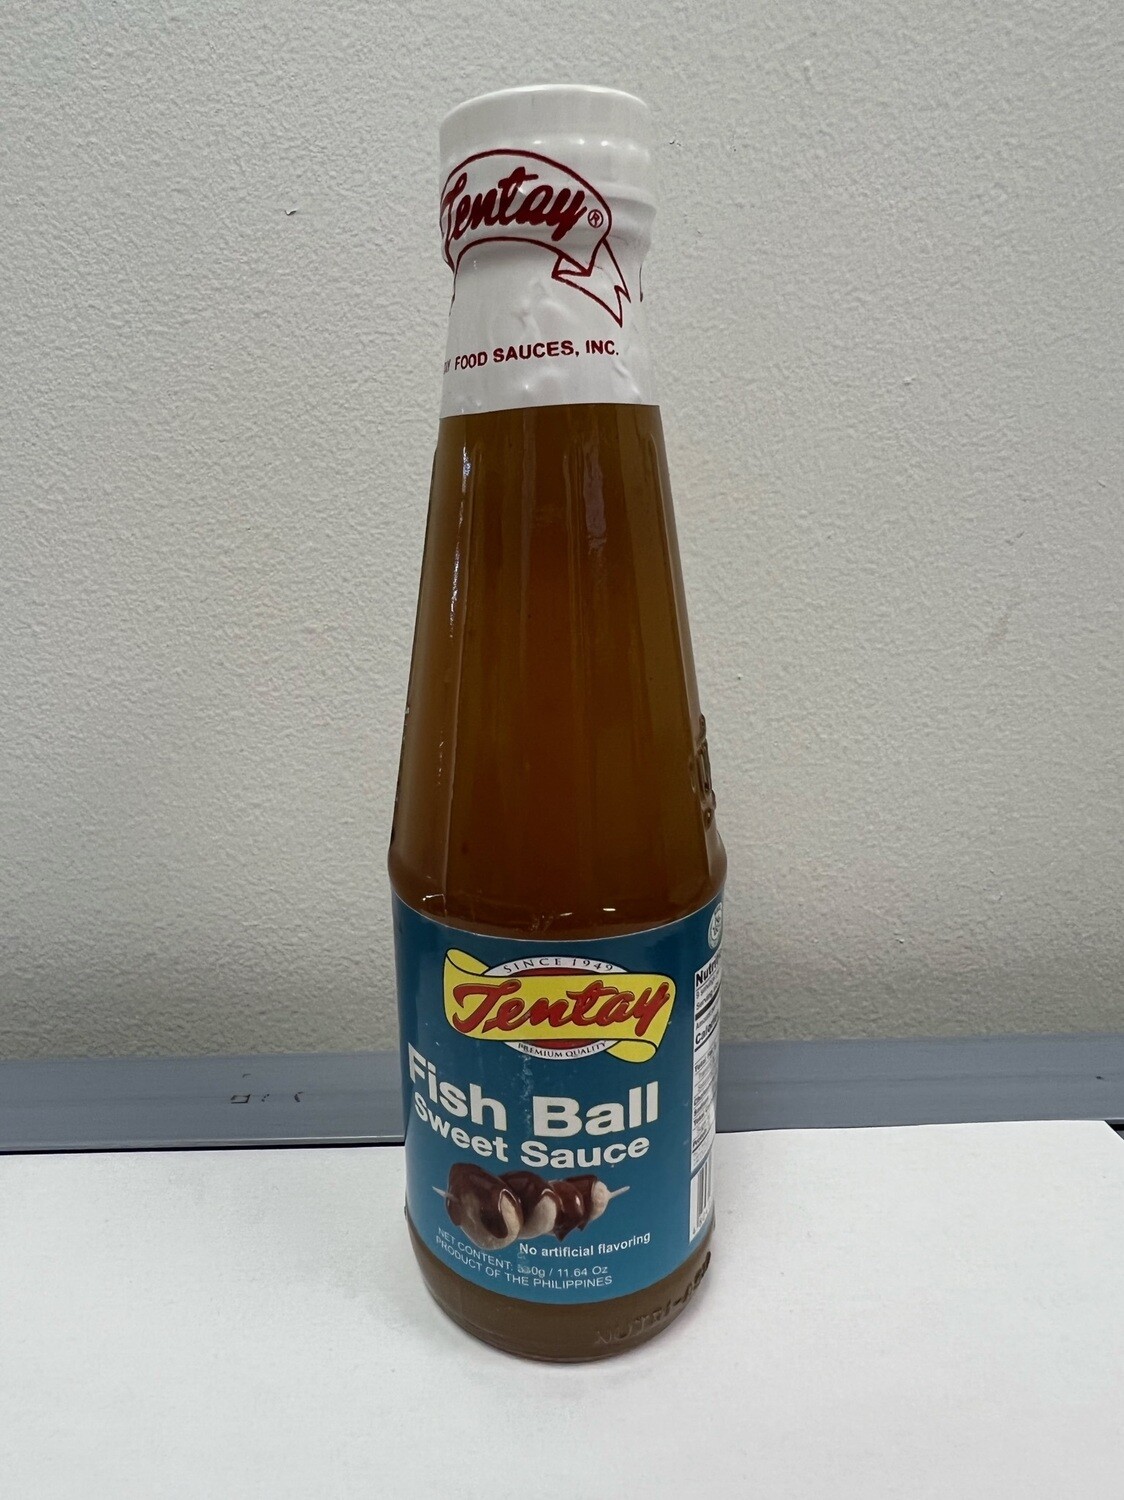 Tentay Fish Ball Sweet Sauce